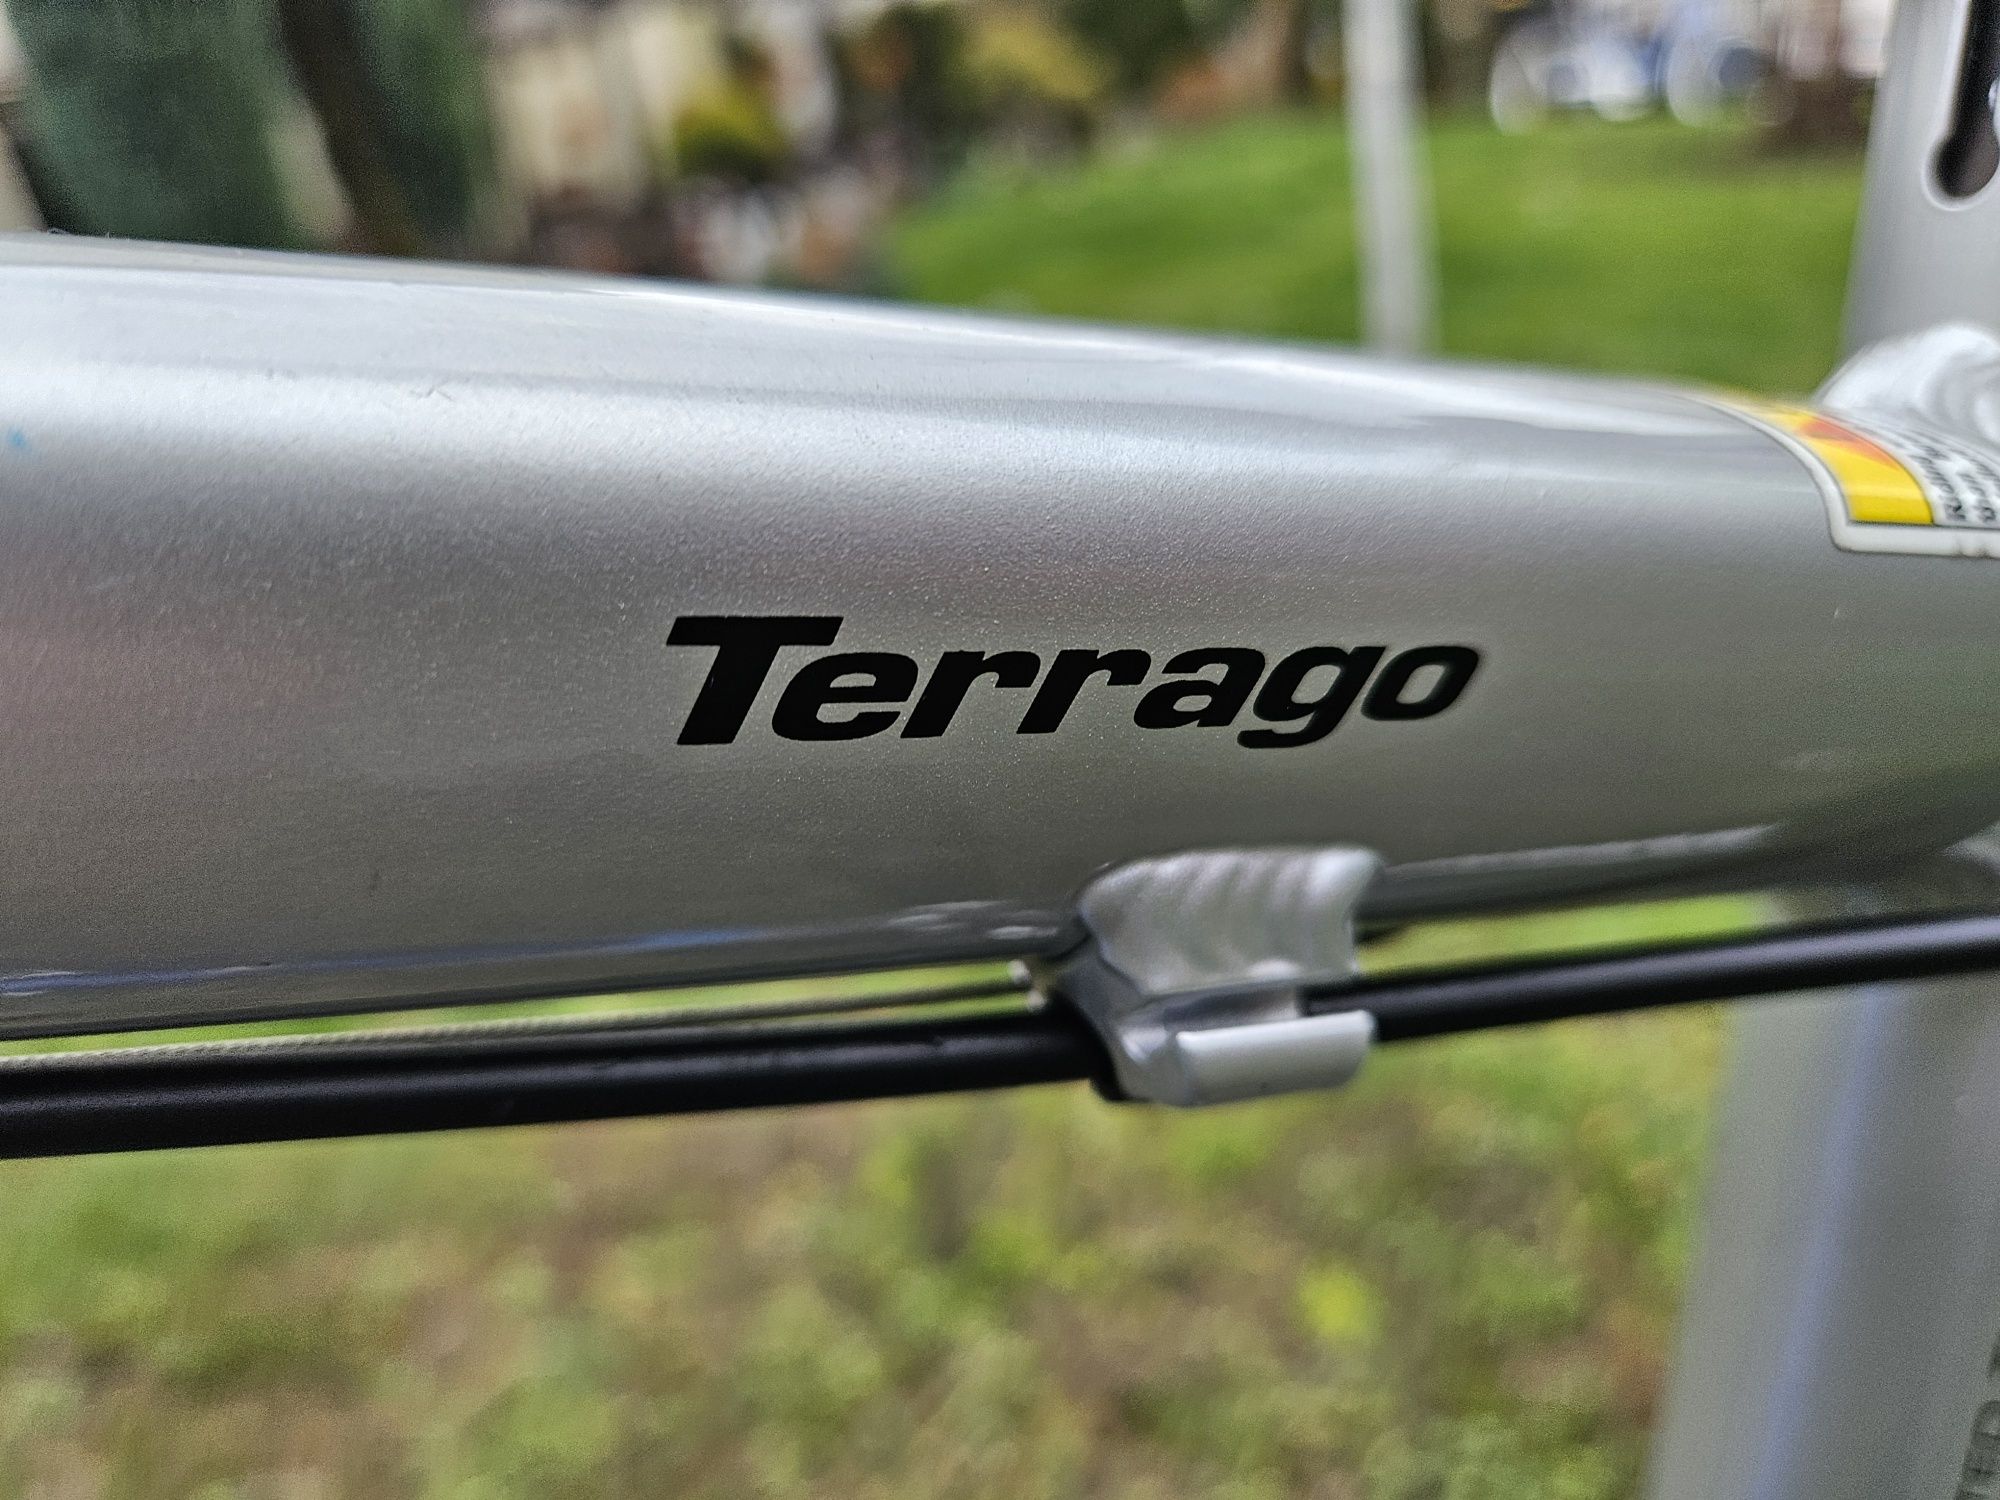 Giant Terrago MTB